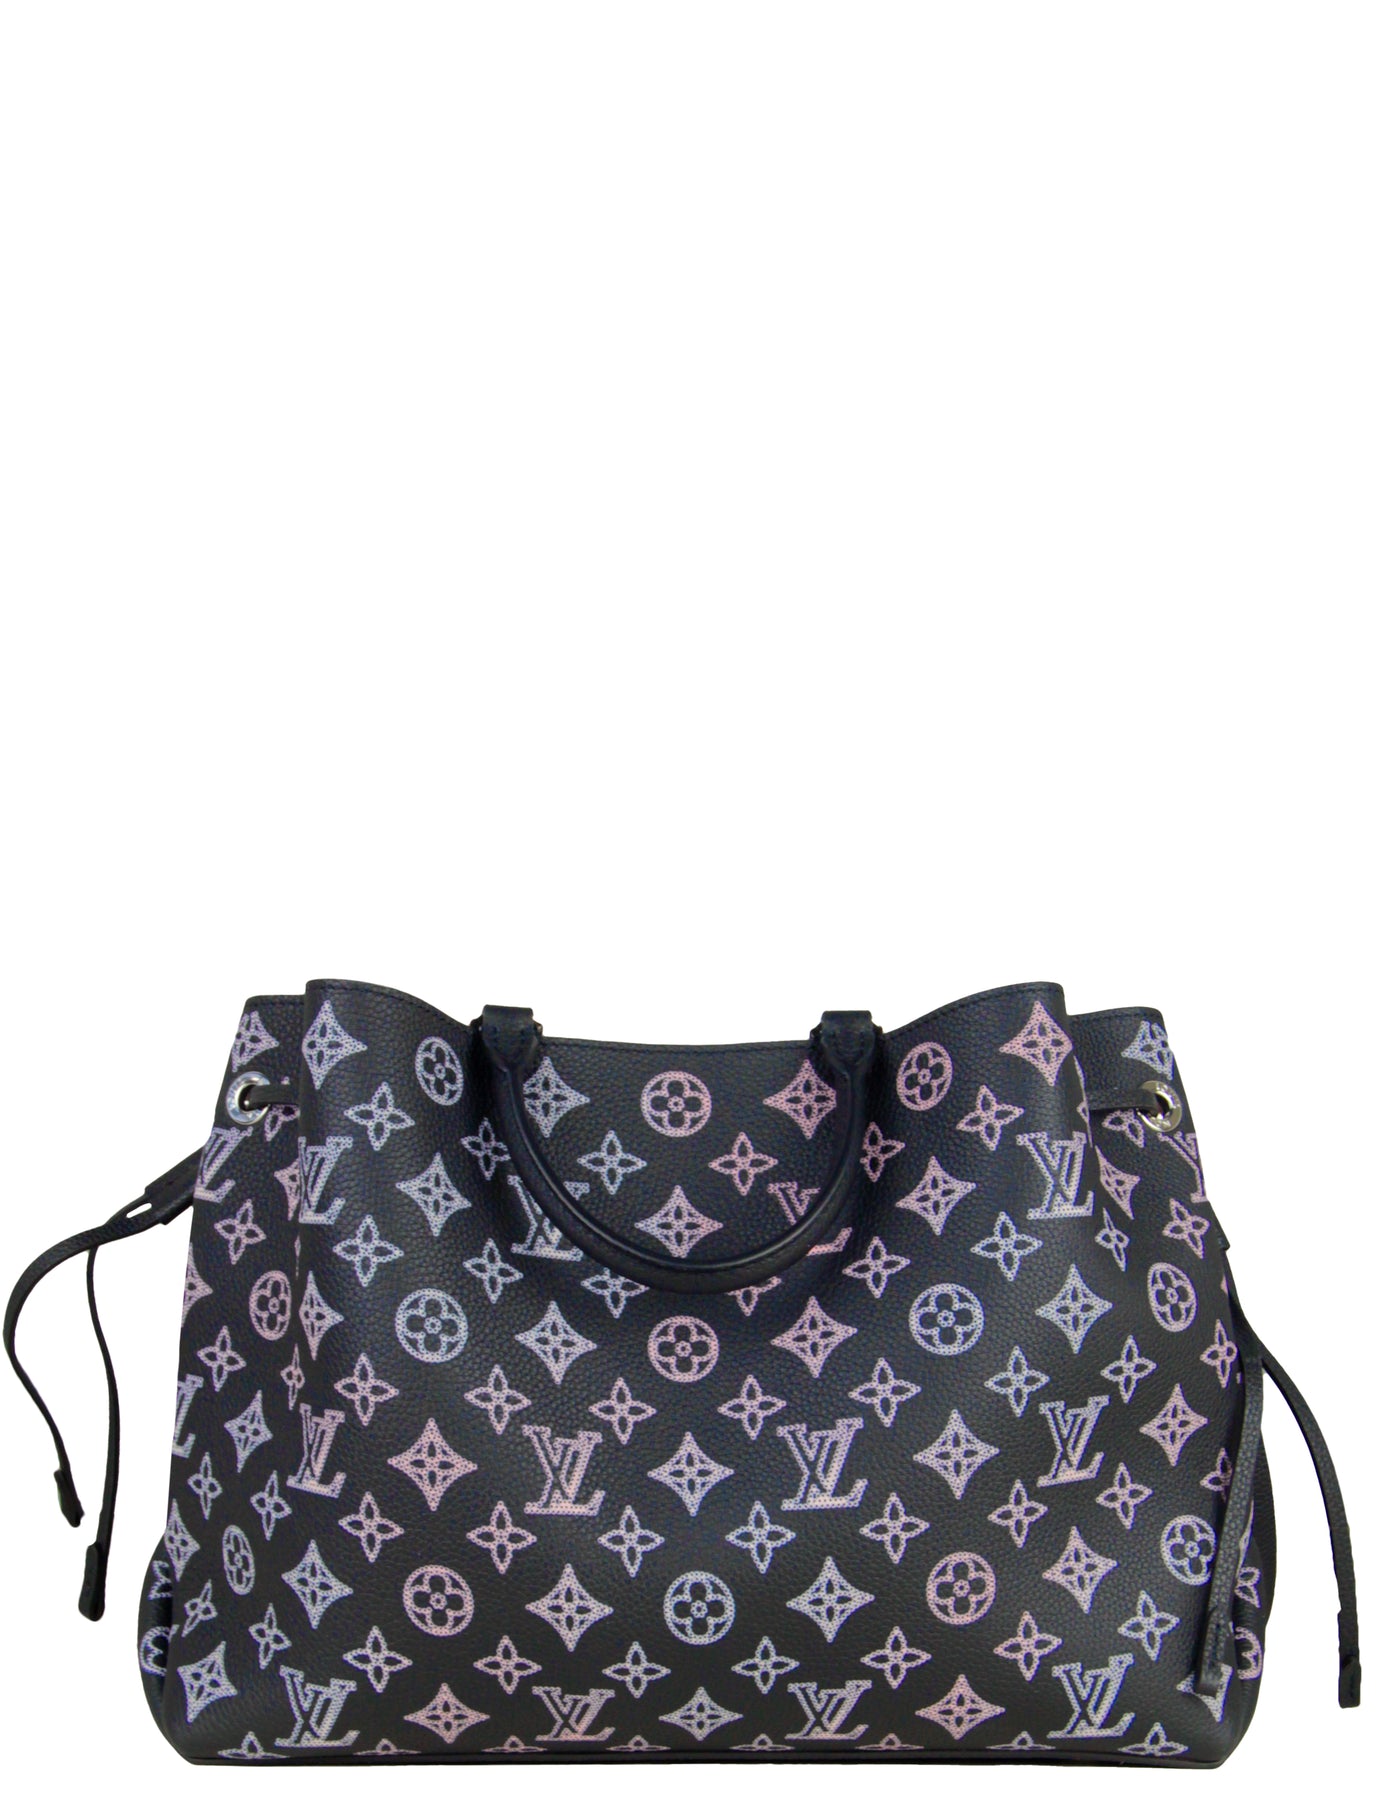 Women's handbag bags Louis Vuitton M59200 Black Bella Tote bag  :www.08md.com 